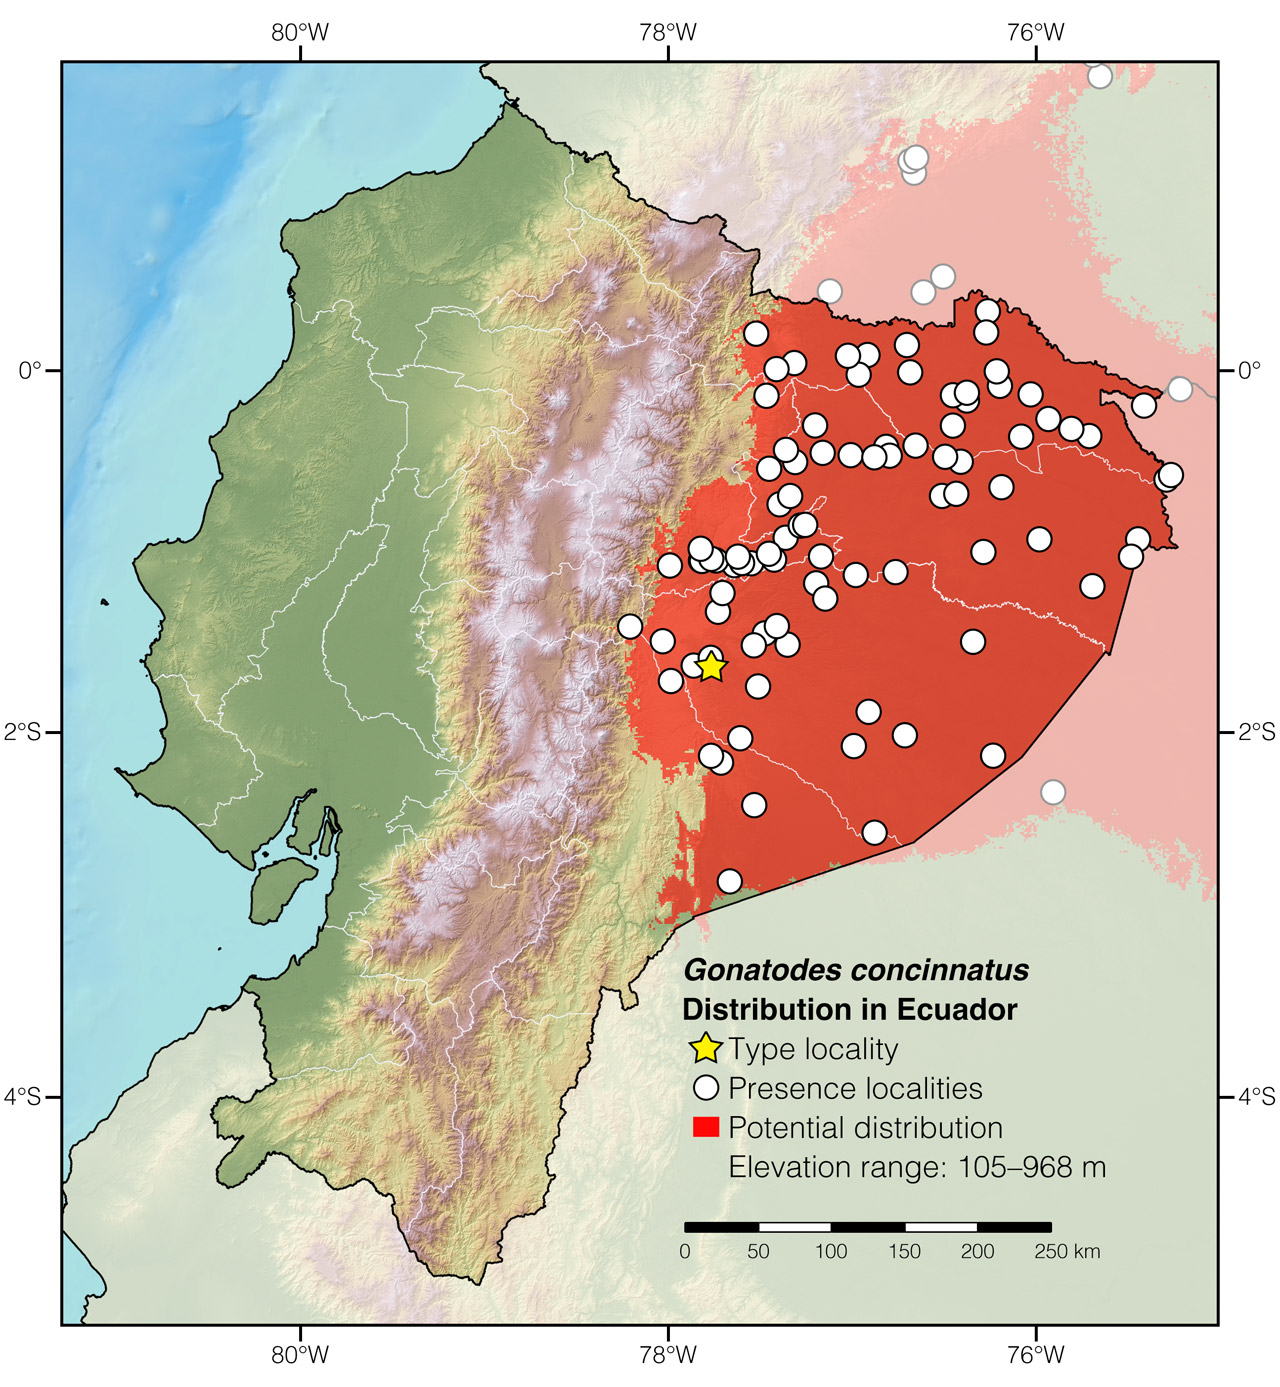 Distribution of Gonatodes concinnatus in Ecuador